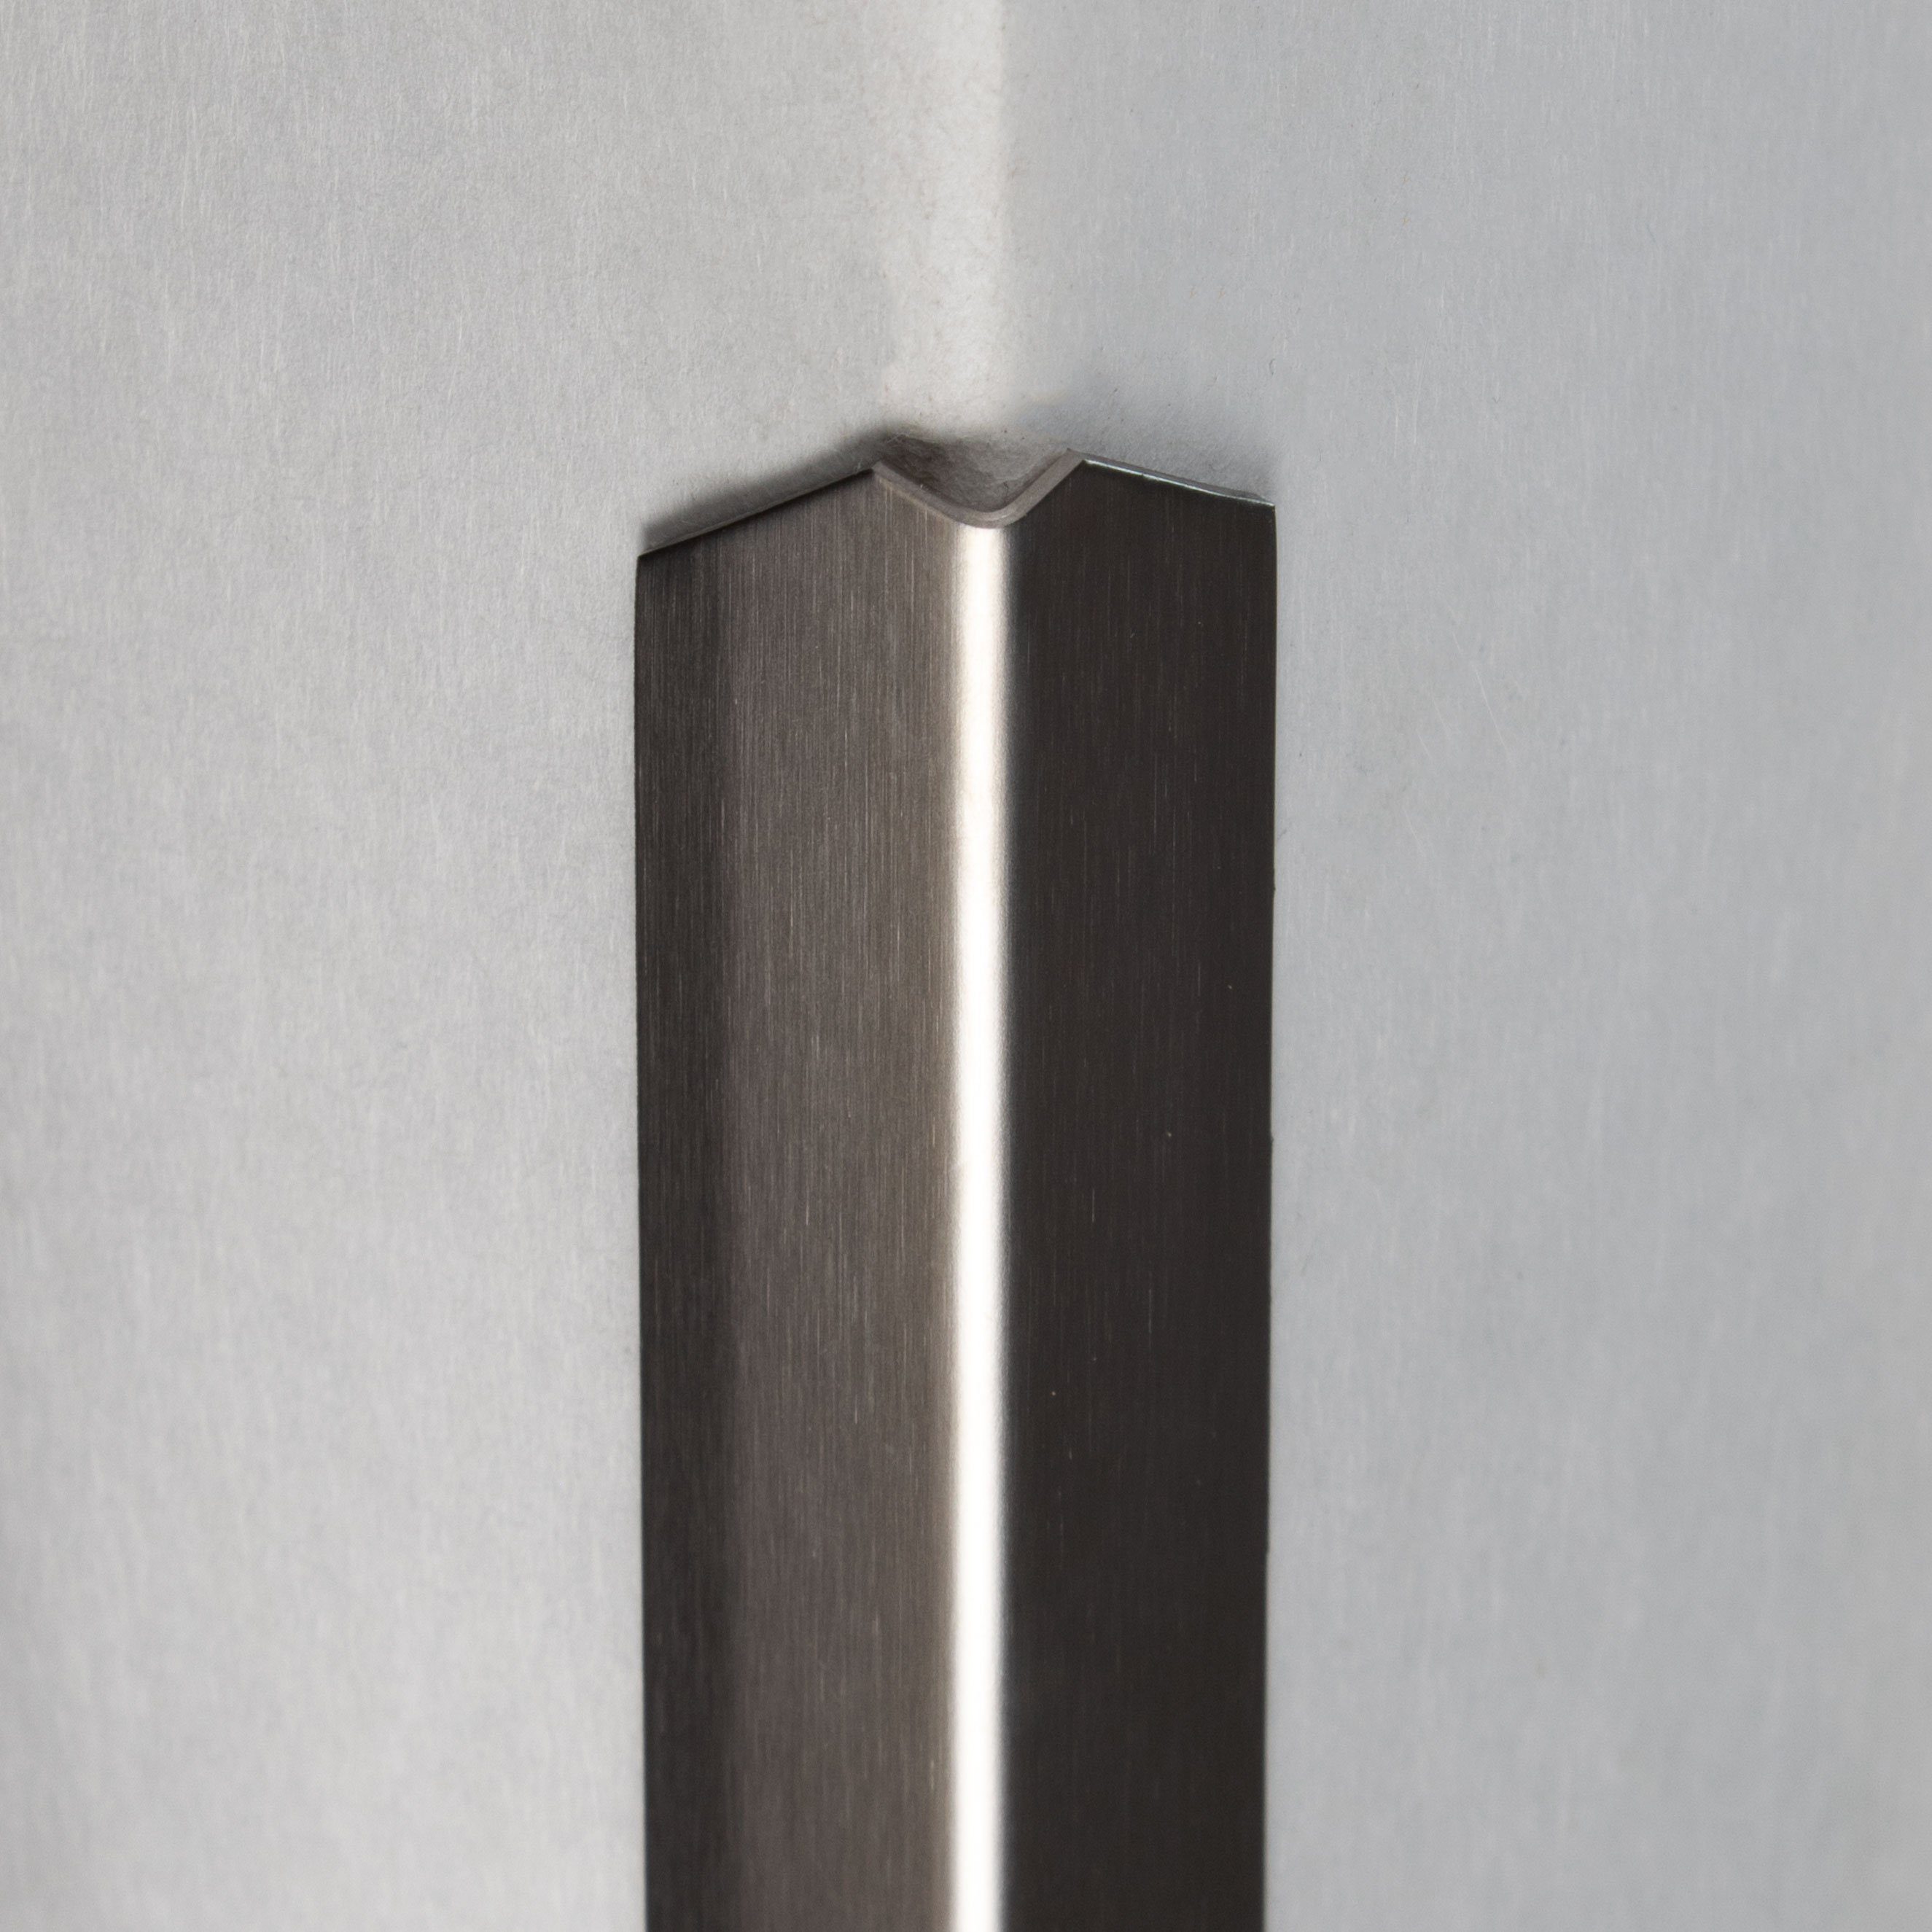 PROVISTON Eckprofil Aluminium, 20 x 20 x 1000 mm, Edelstahl matt